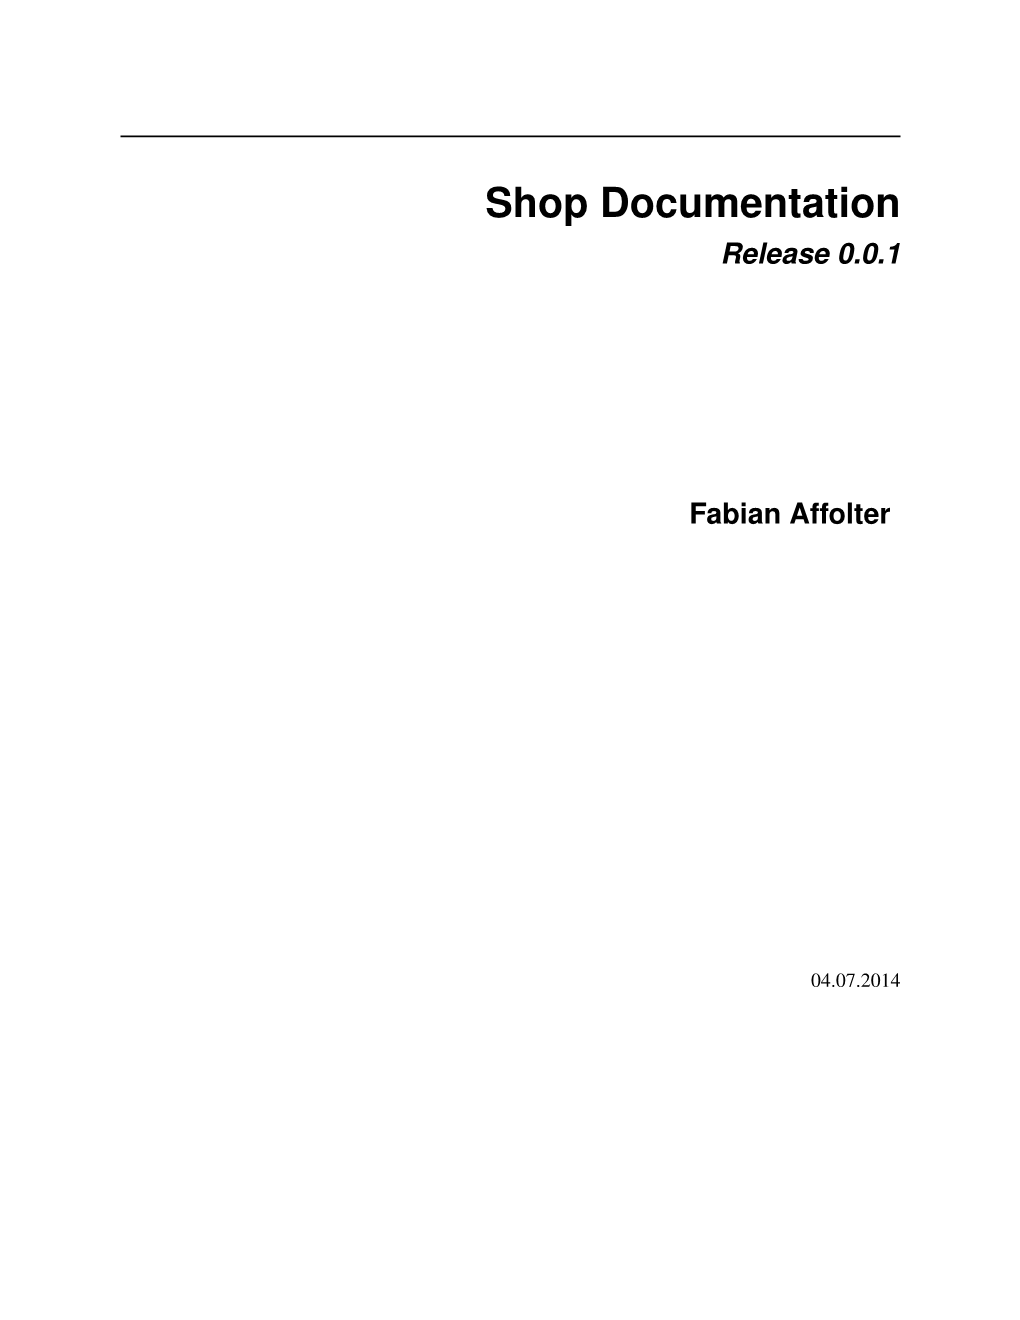 Shop Documentation Release 0.0.1